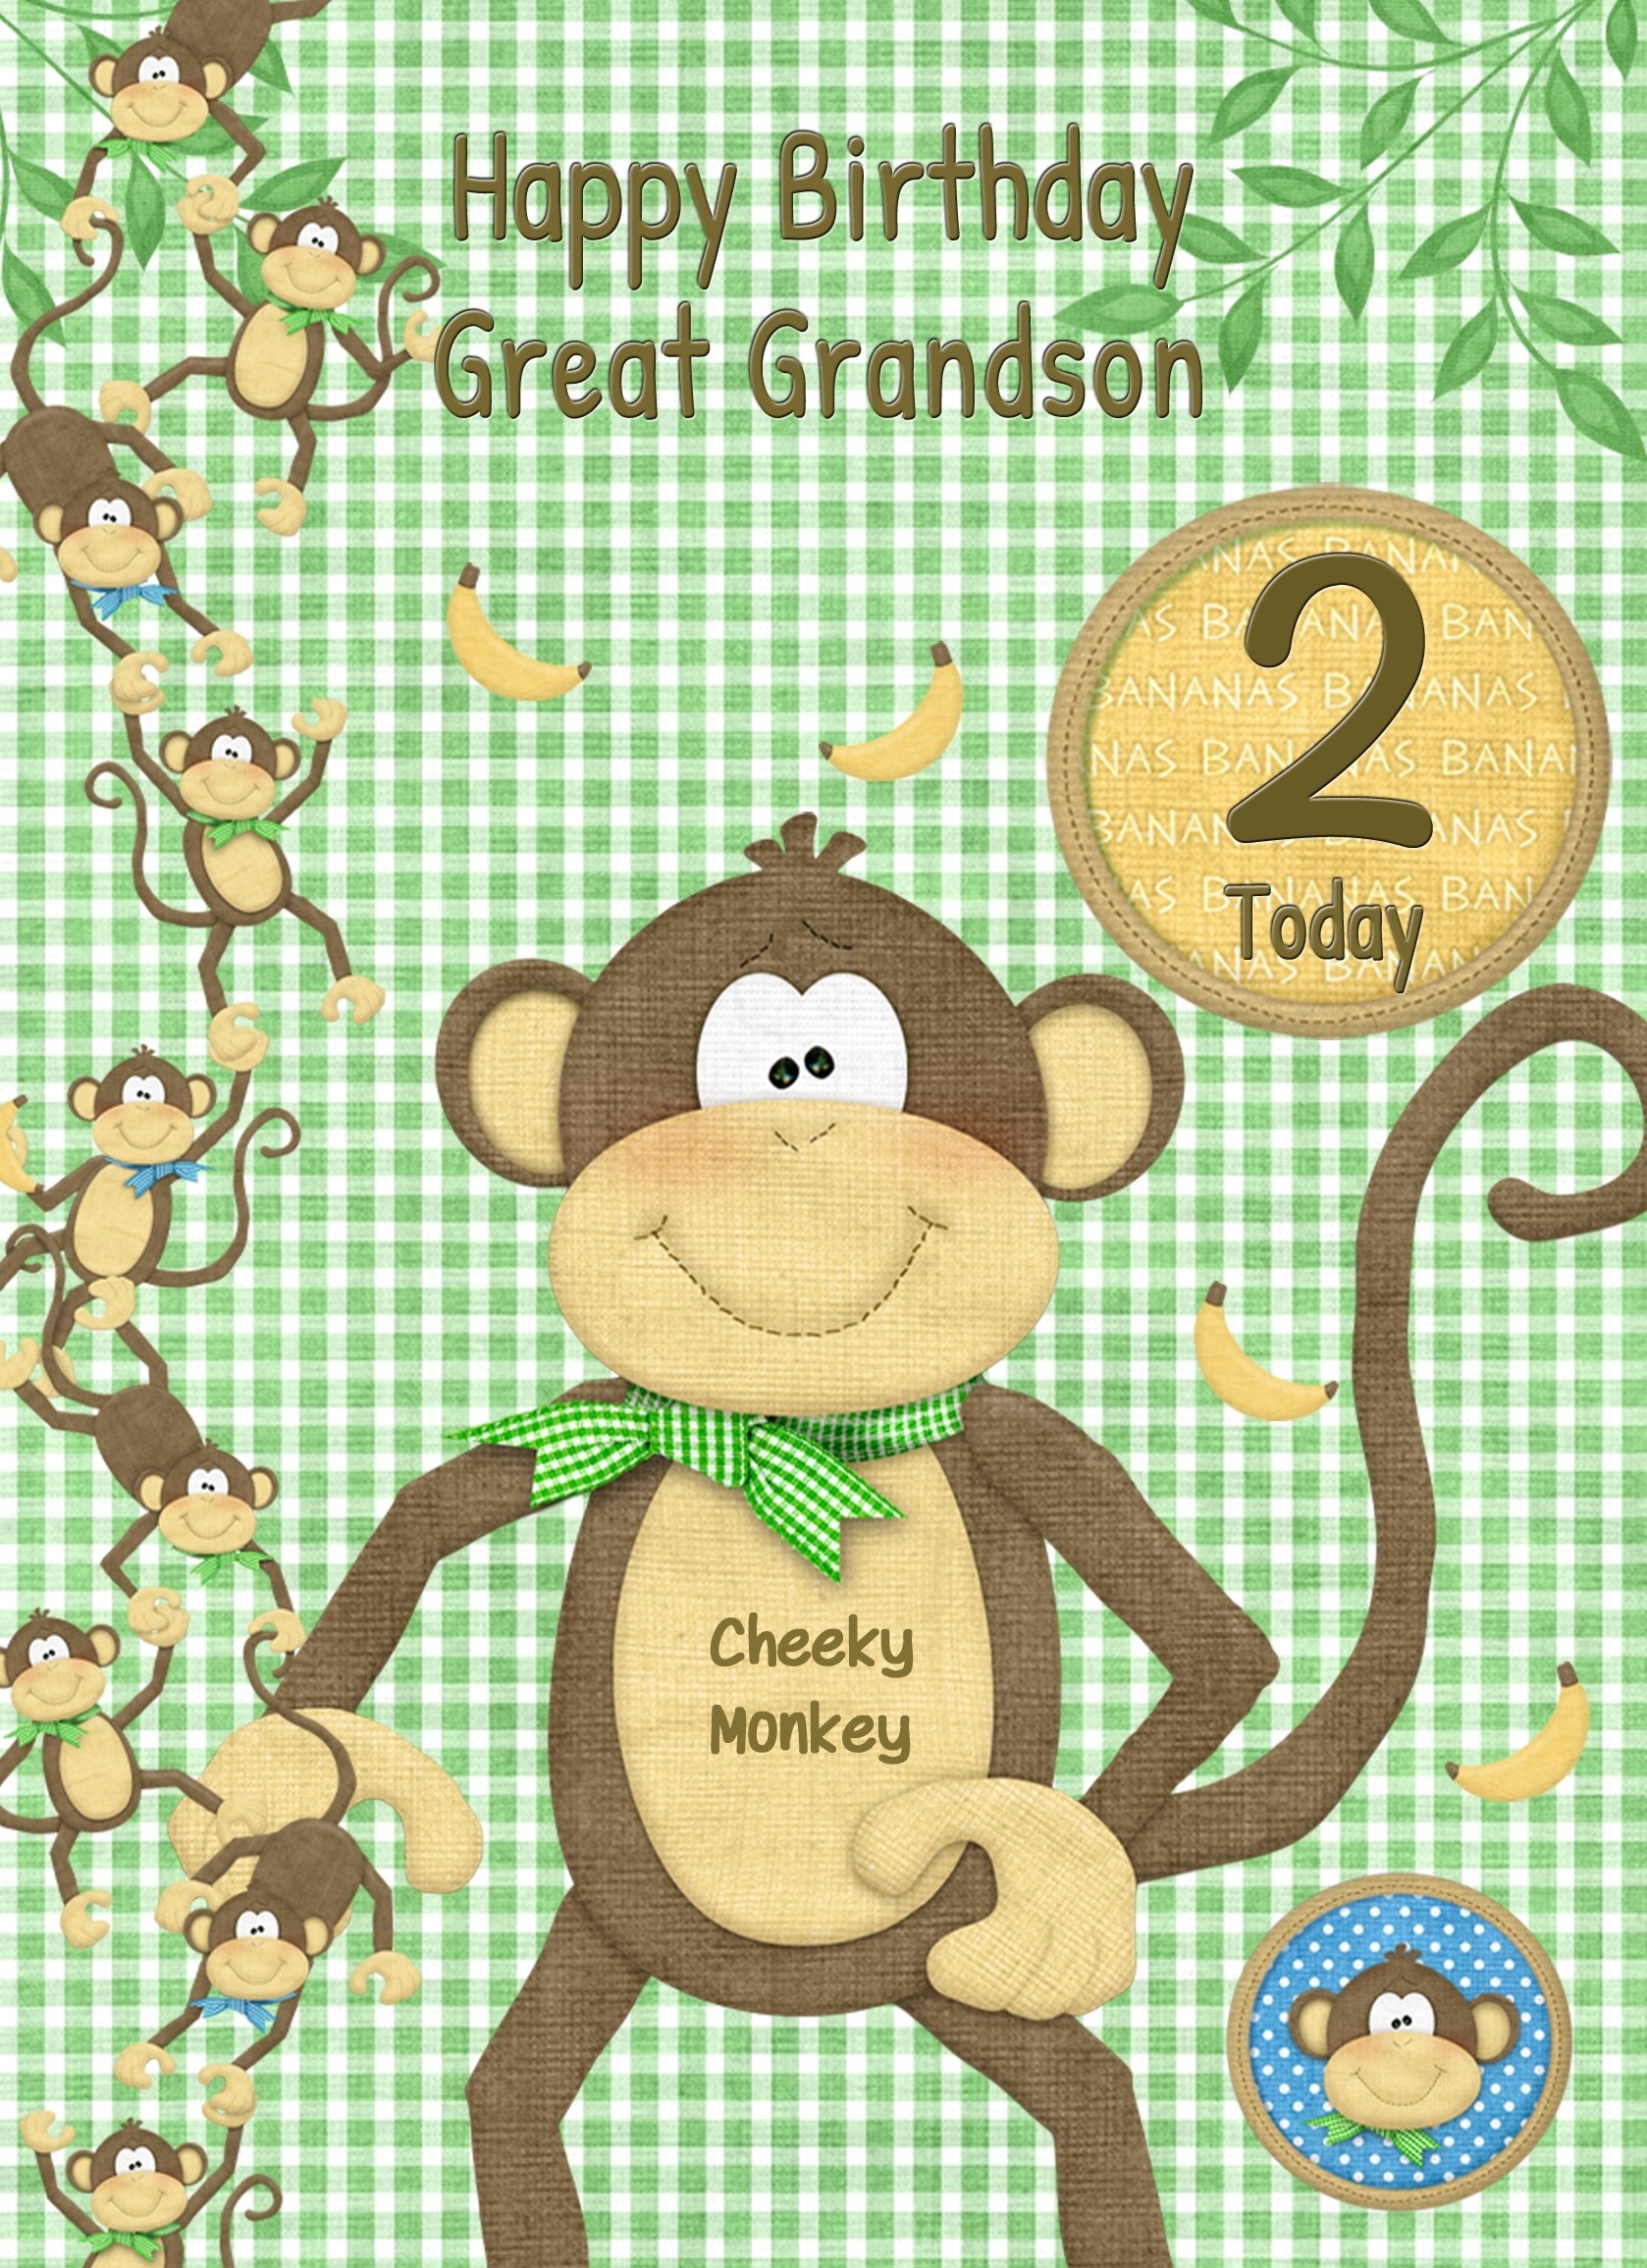 Kids 2nd Birthday Cheeky Monkey Cartoon Card for Great Grandson